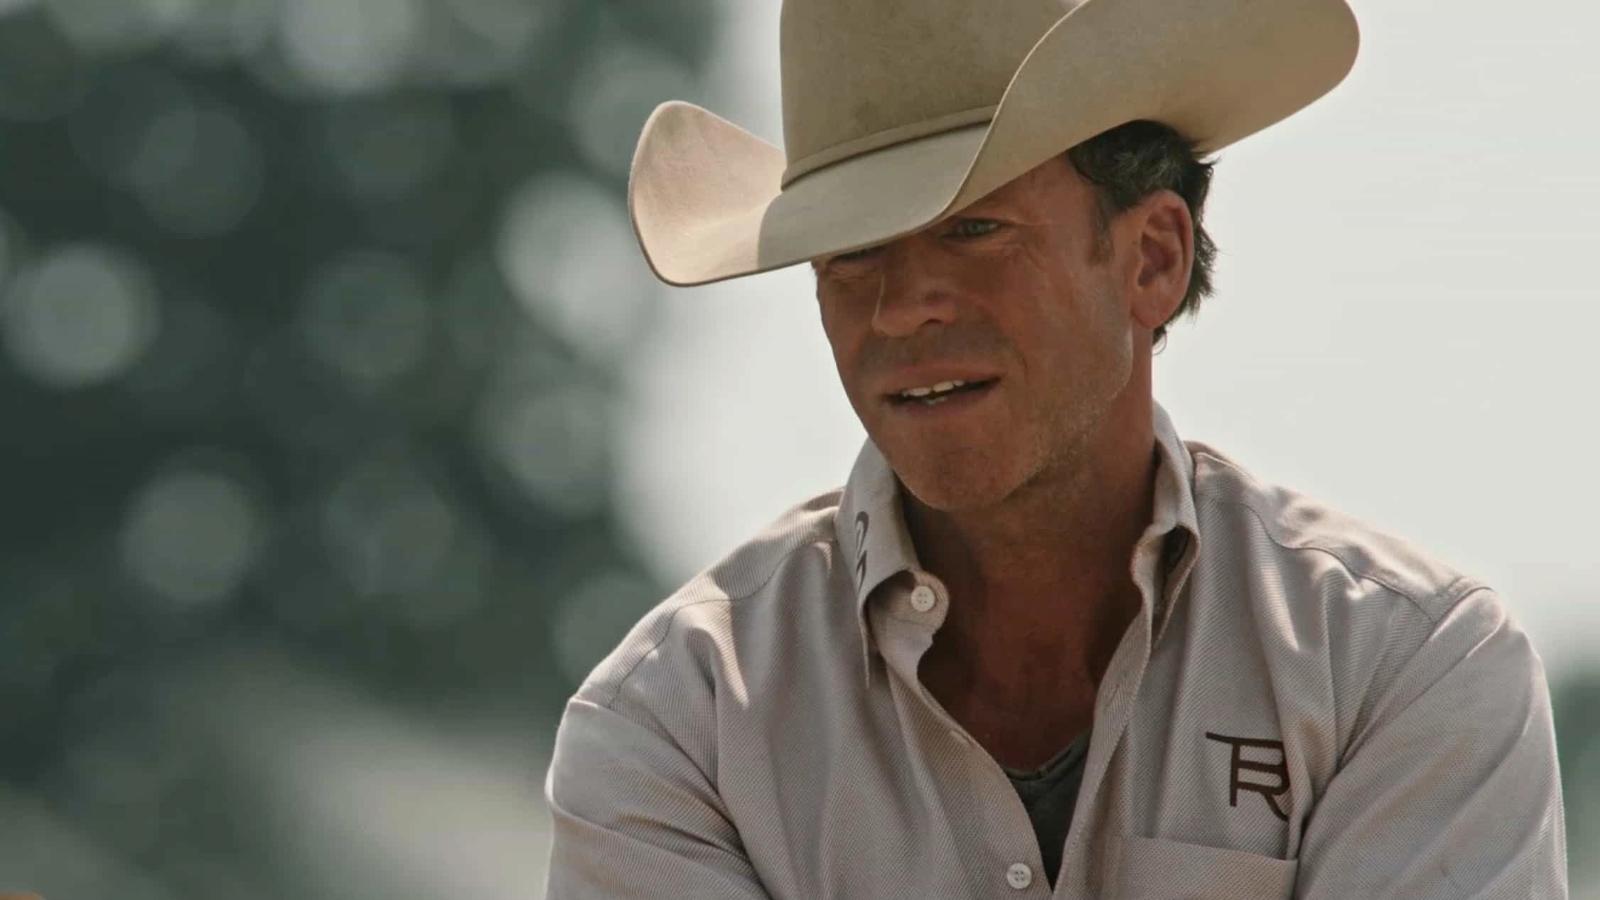 Taylor Sheridan as Travis in Yellowstone, wearing a cowboy hat